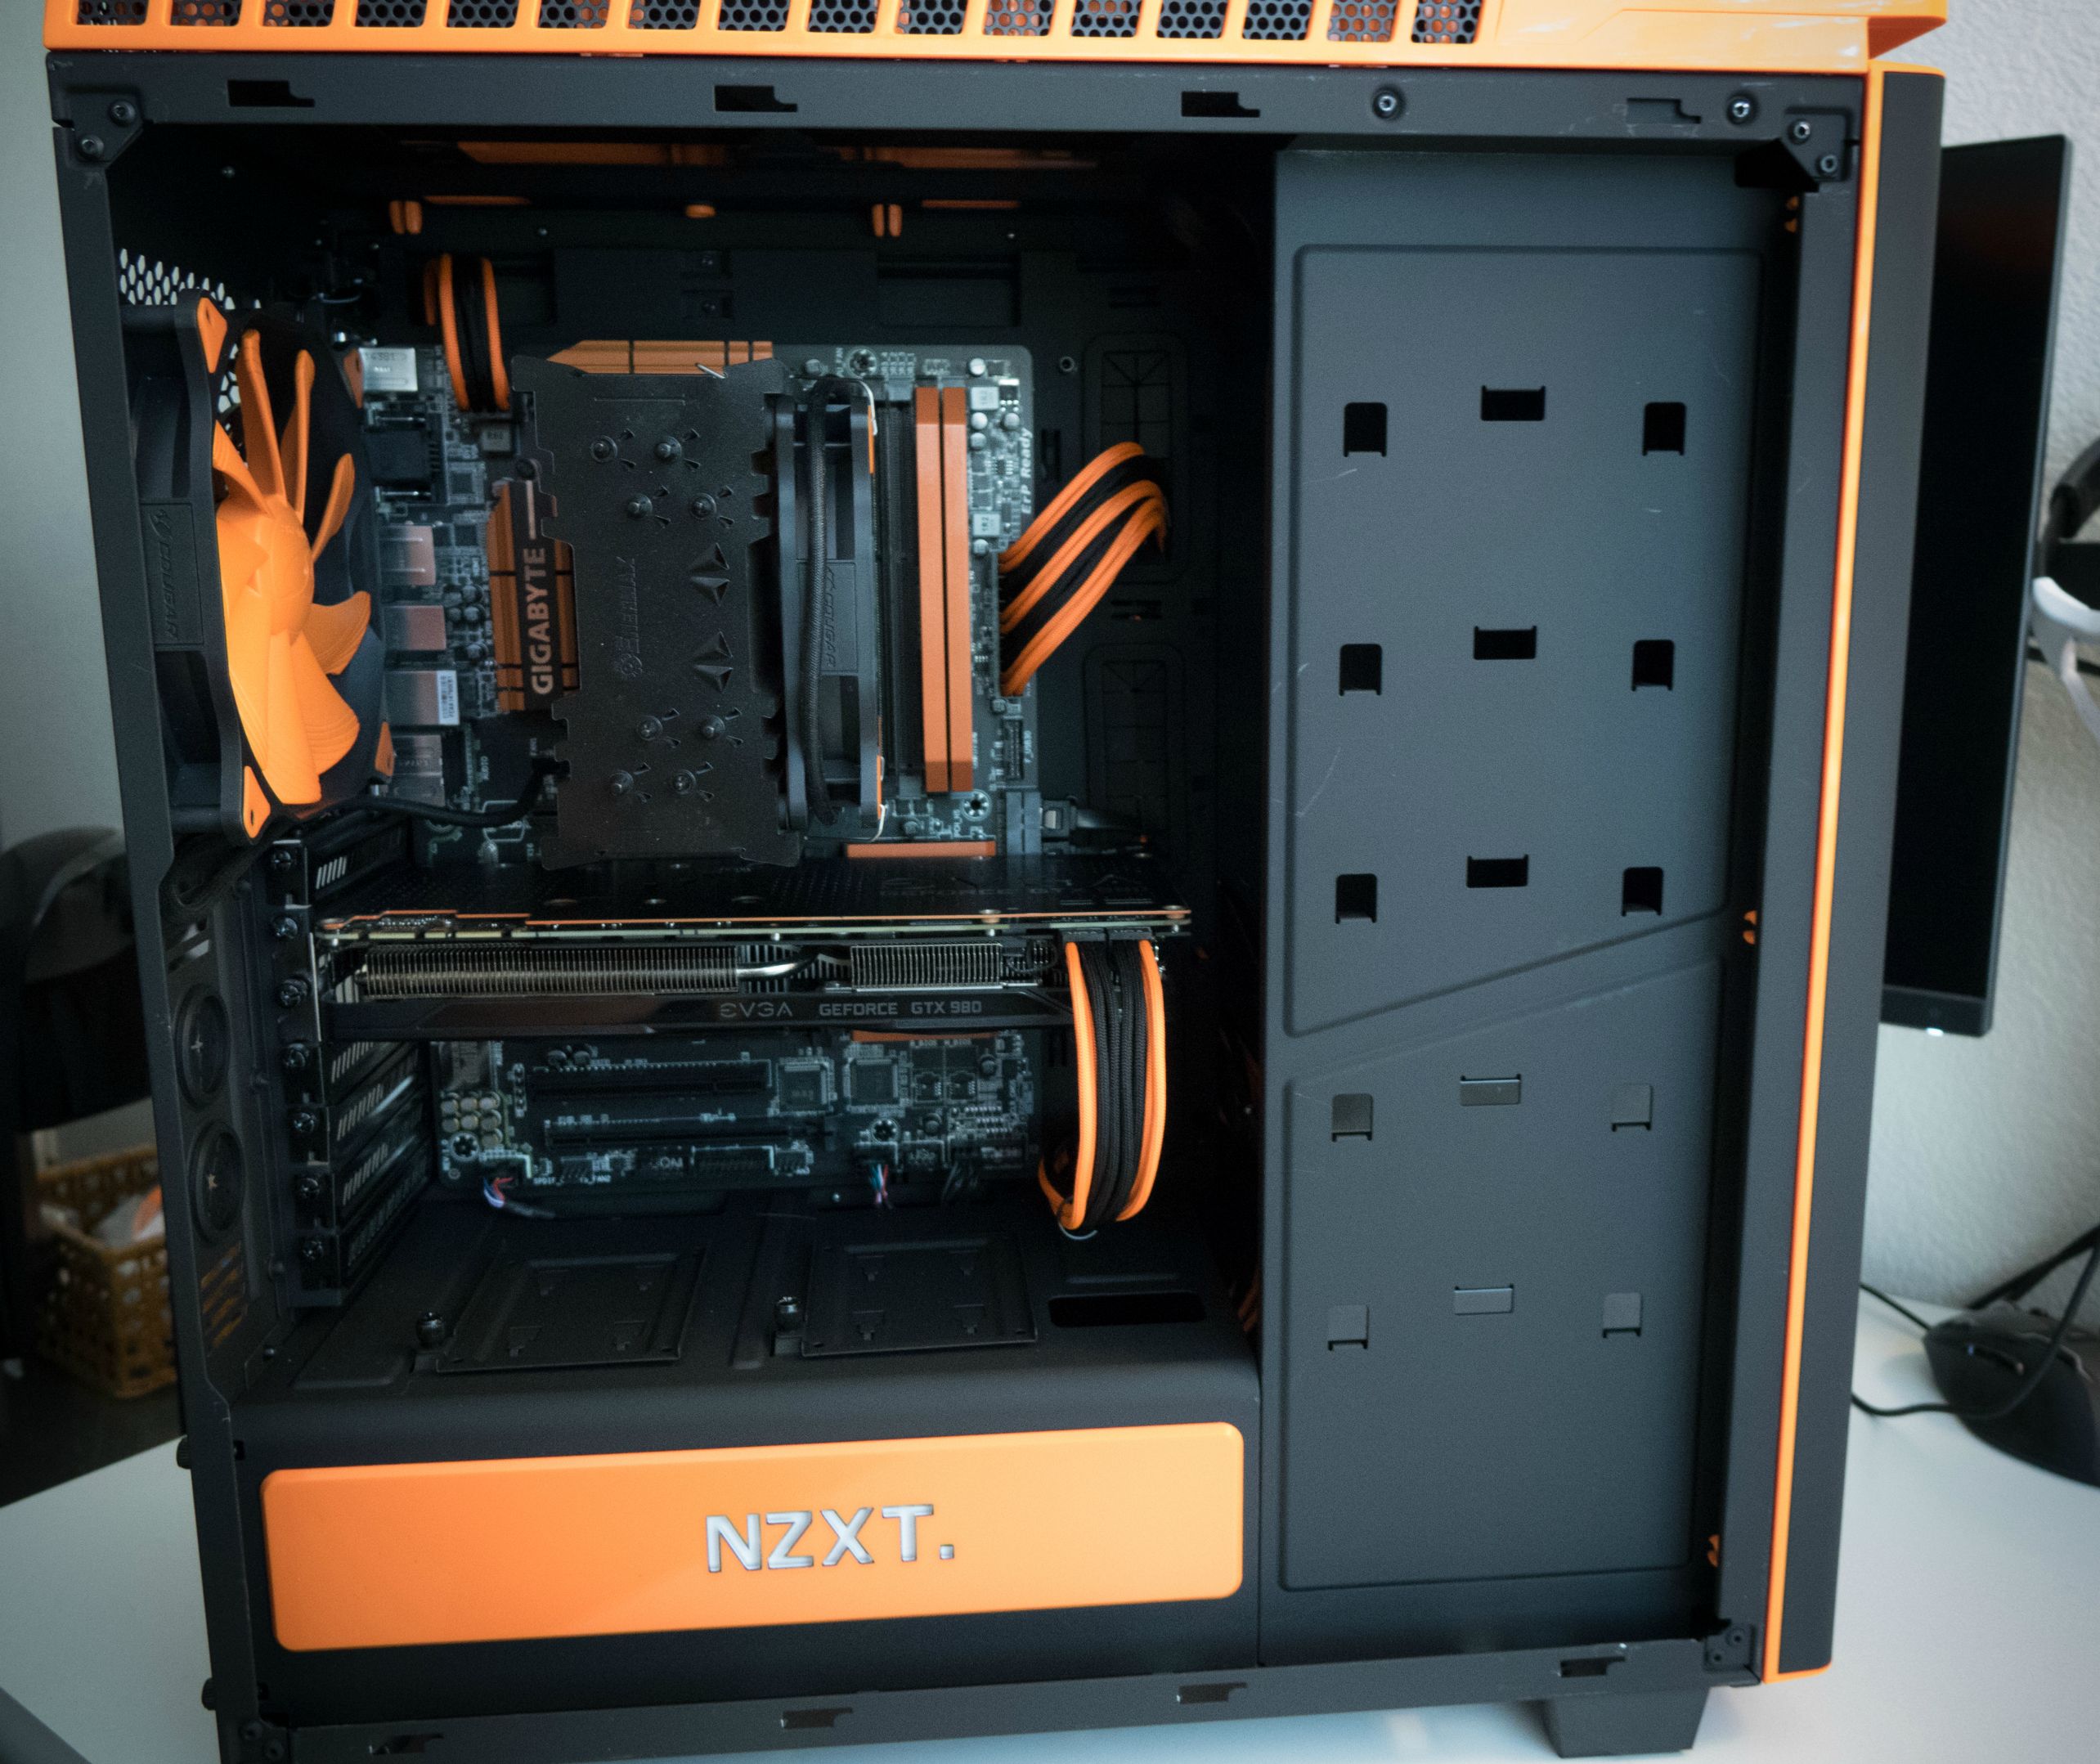 Black/Orange 1440p Gaming PC Build - My first attempt at PC modding ...